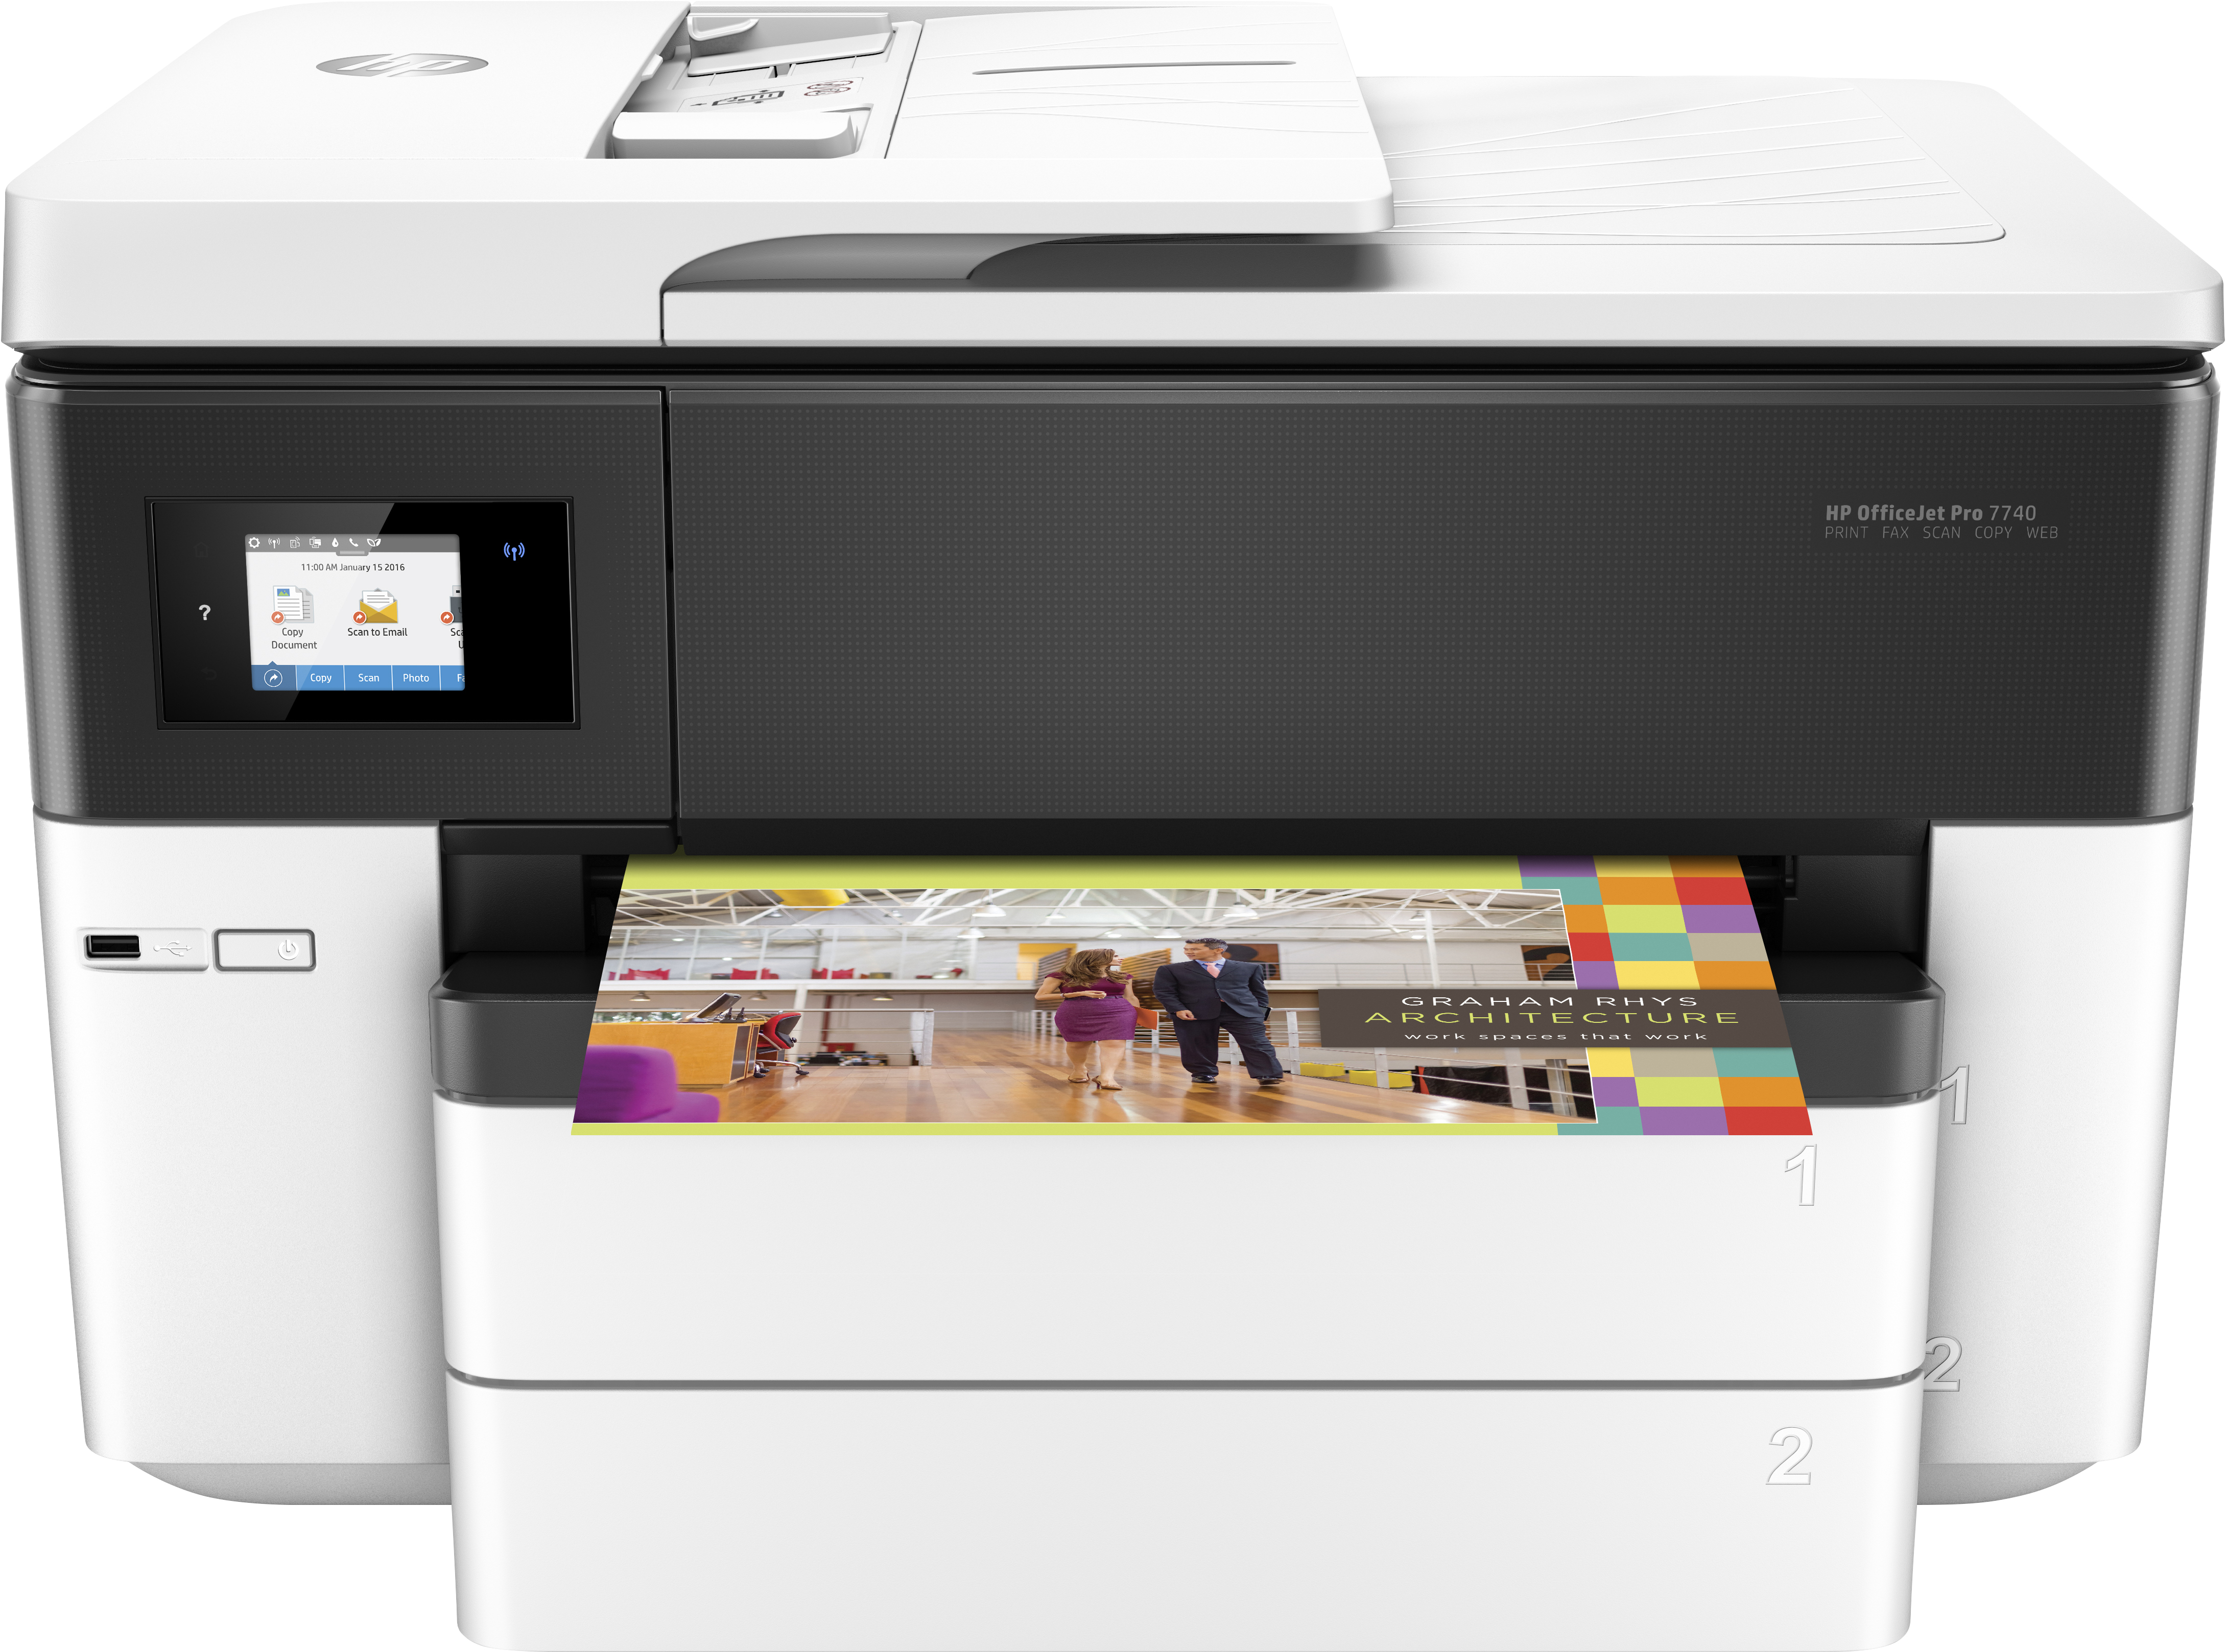 Impresora Tinta Hp officejet pro 7740 wifi copia escanea fax hasta tamaño a3 imprime usb 2.0 ethernet direct smart app blanco 22 7740wf